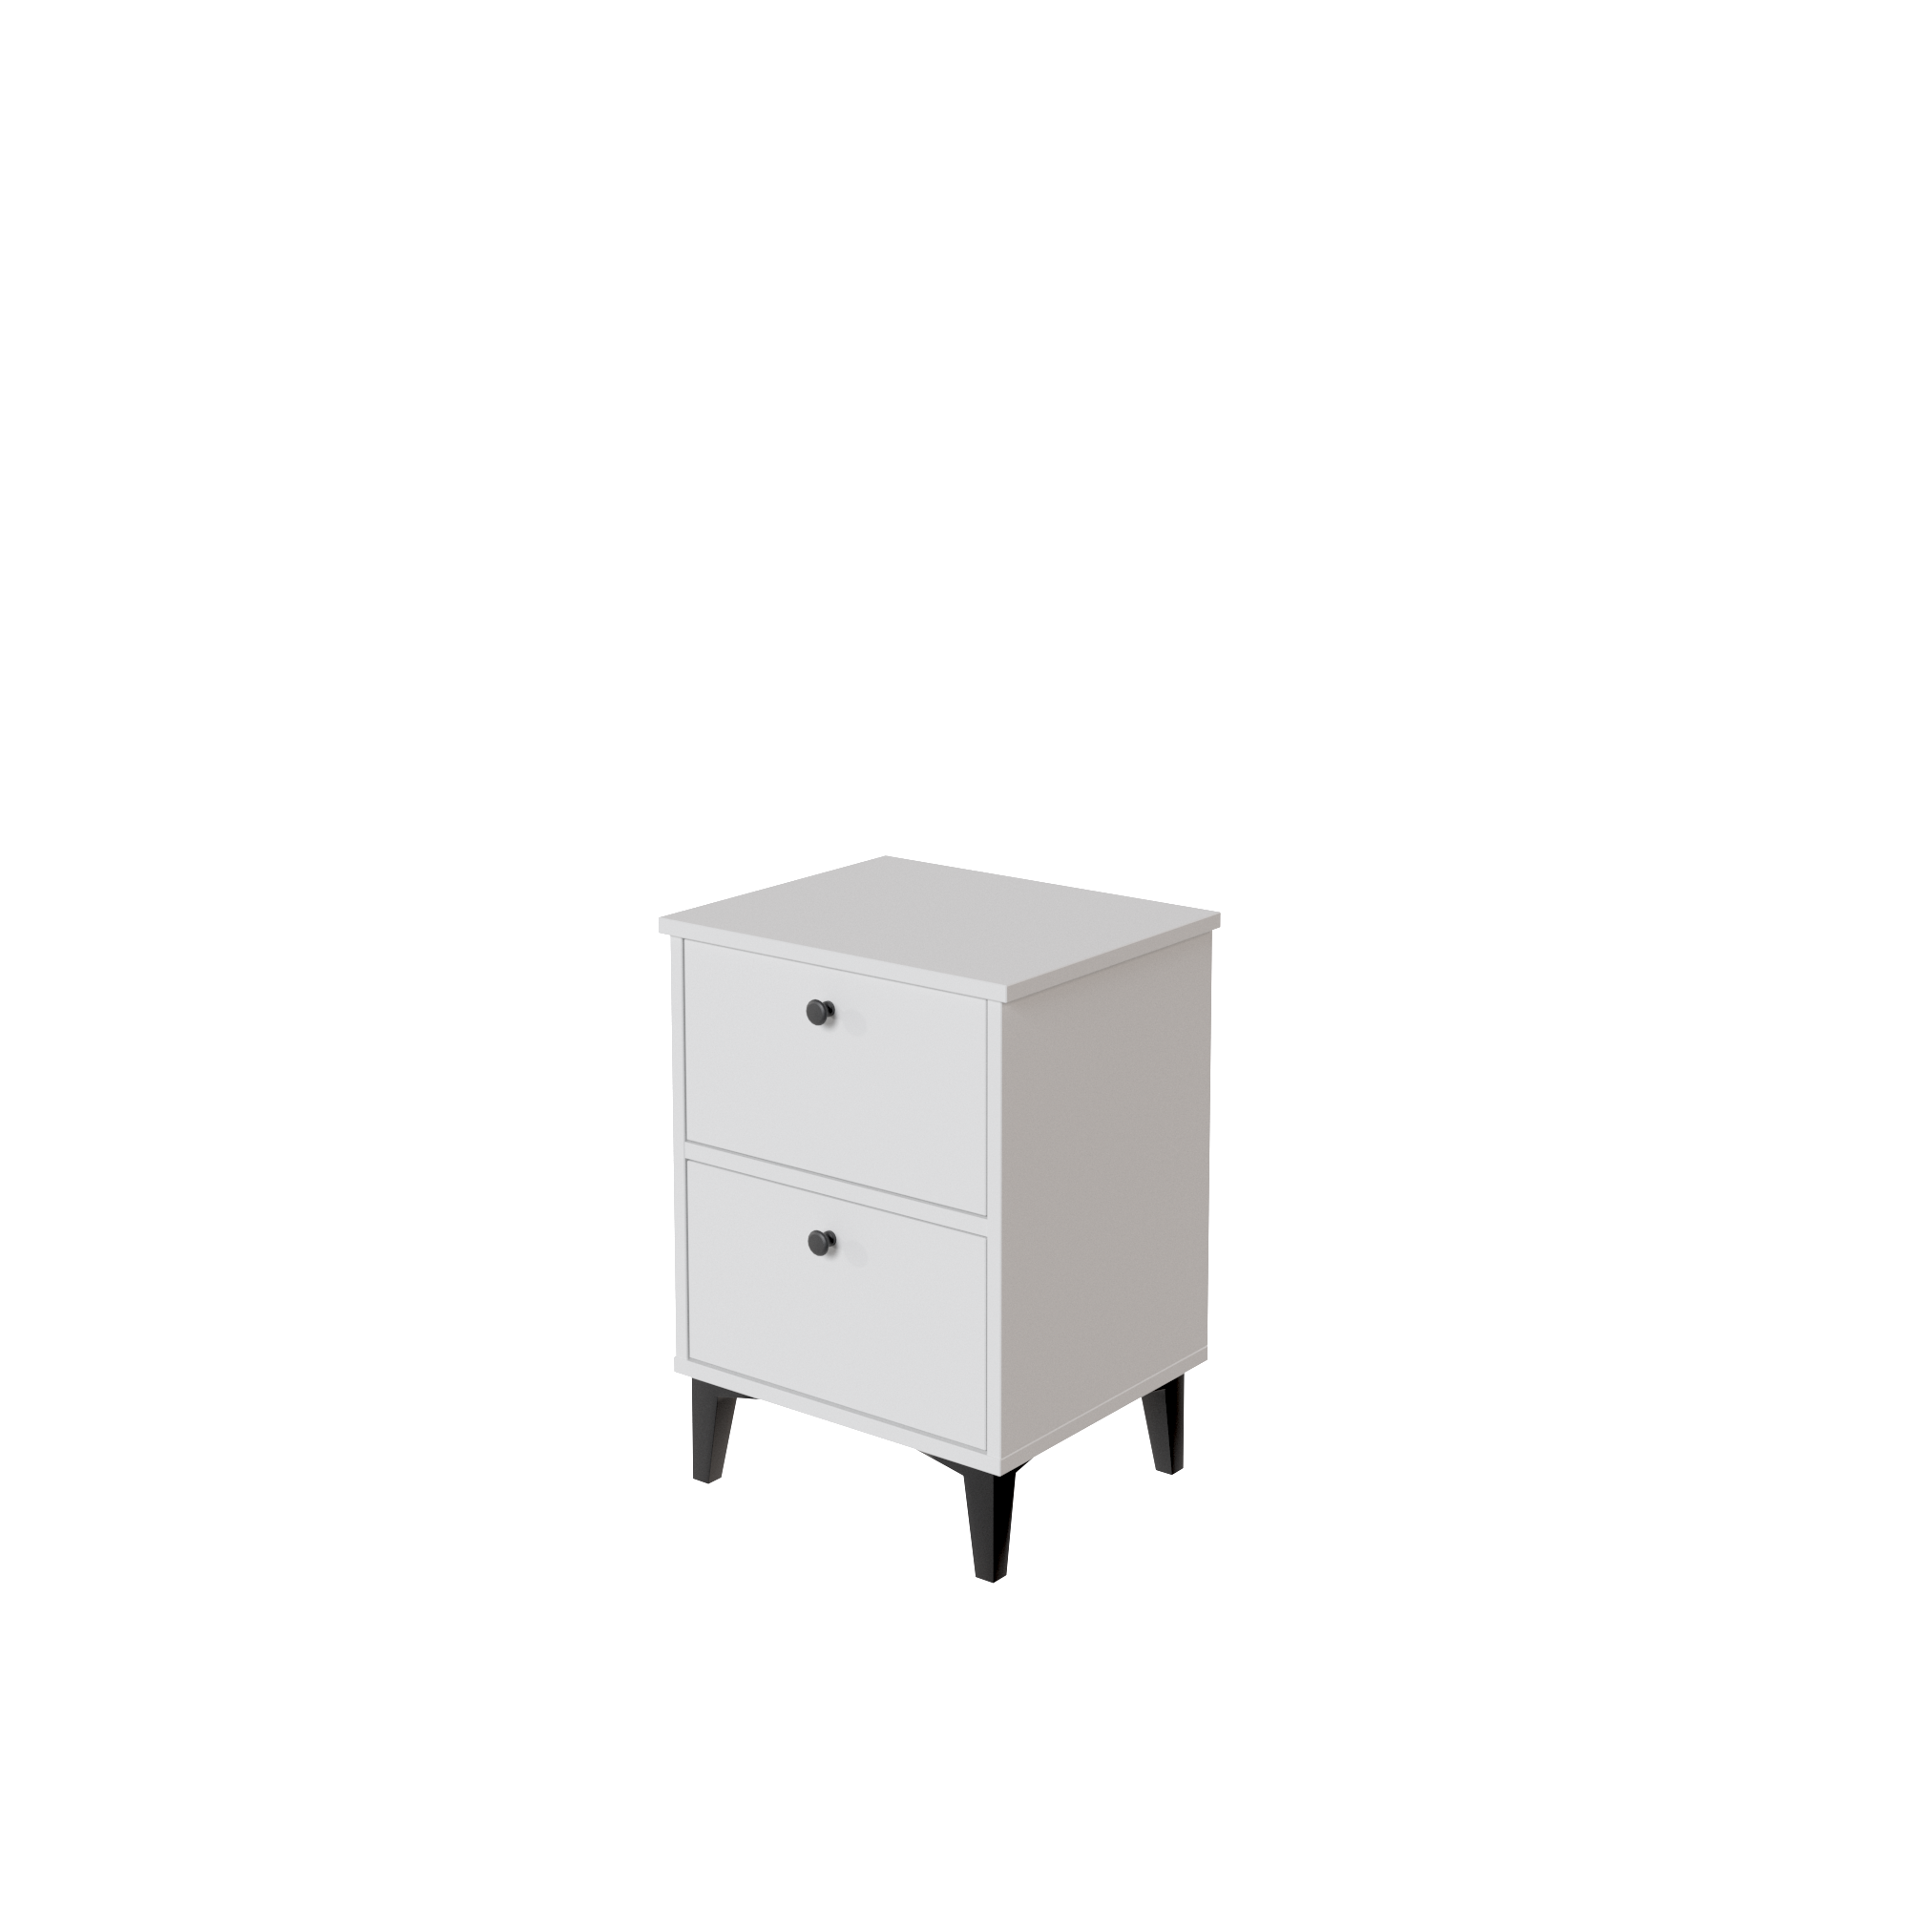 Mesilla home limia blanca con 2 cajones de 42x56.8x35 cm